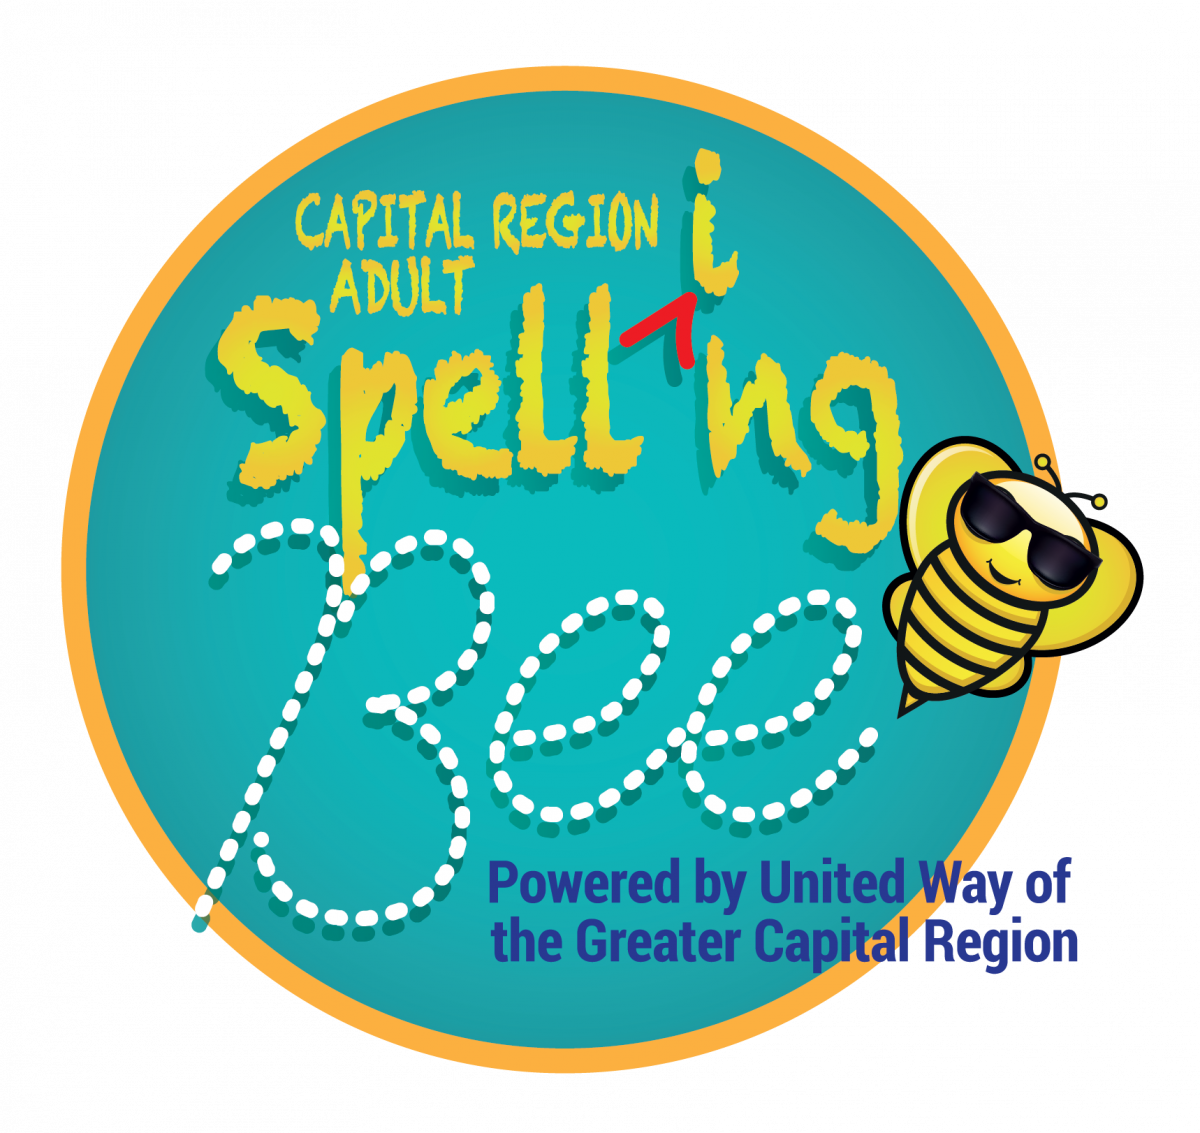 Capital Region Adult Spelling Bee